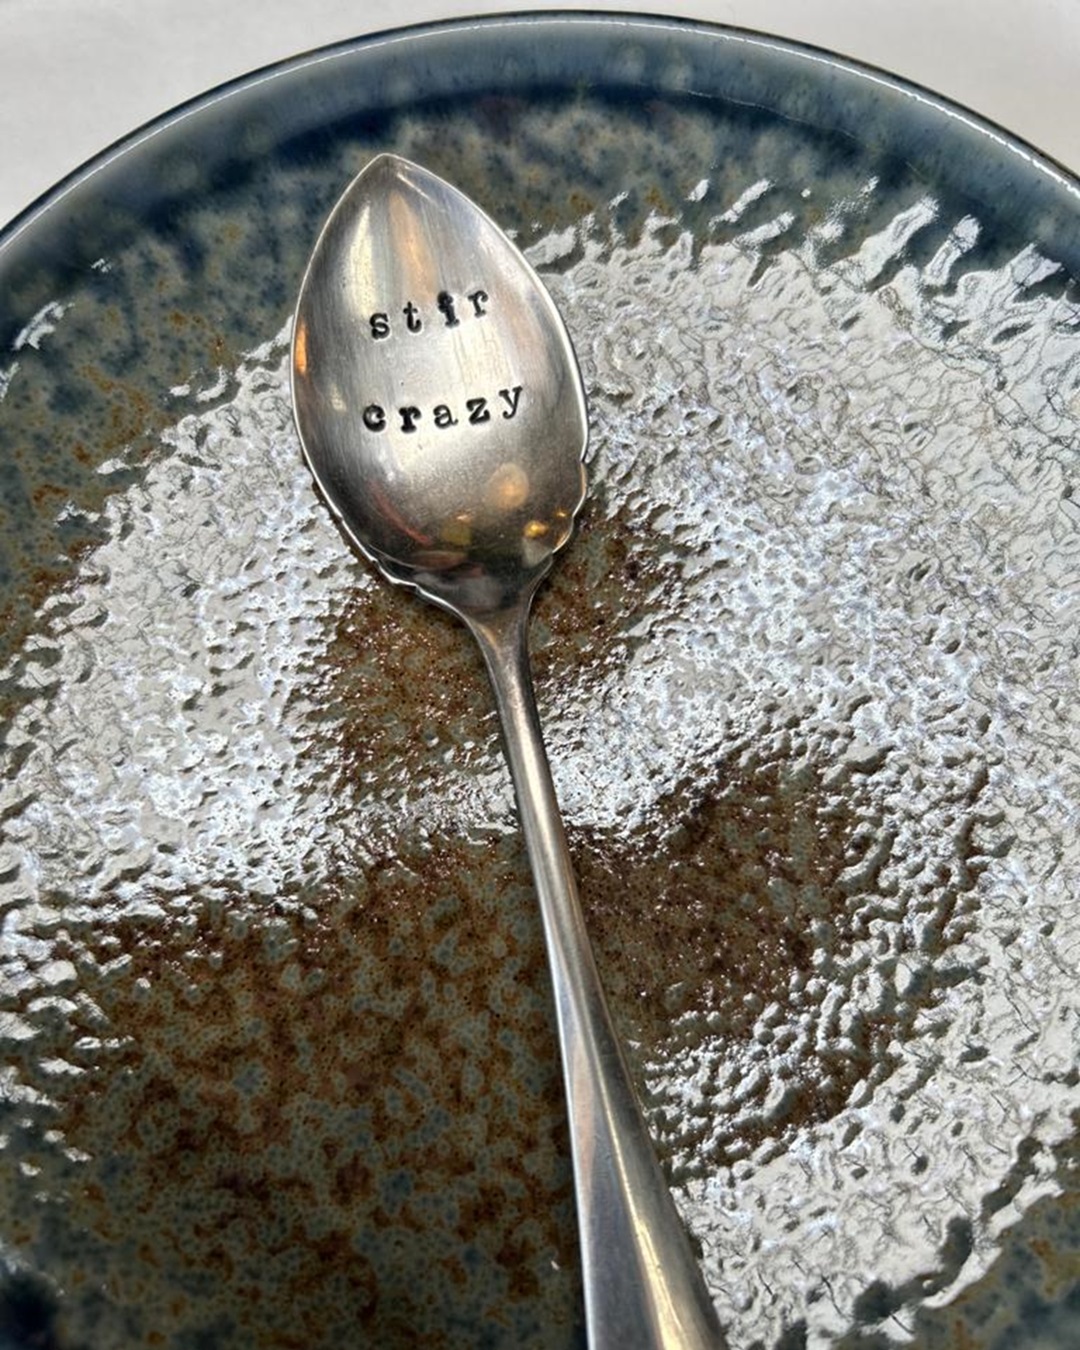 Silver stamped spoon stir crazy